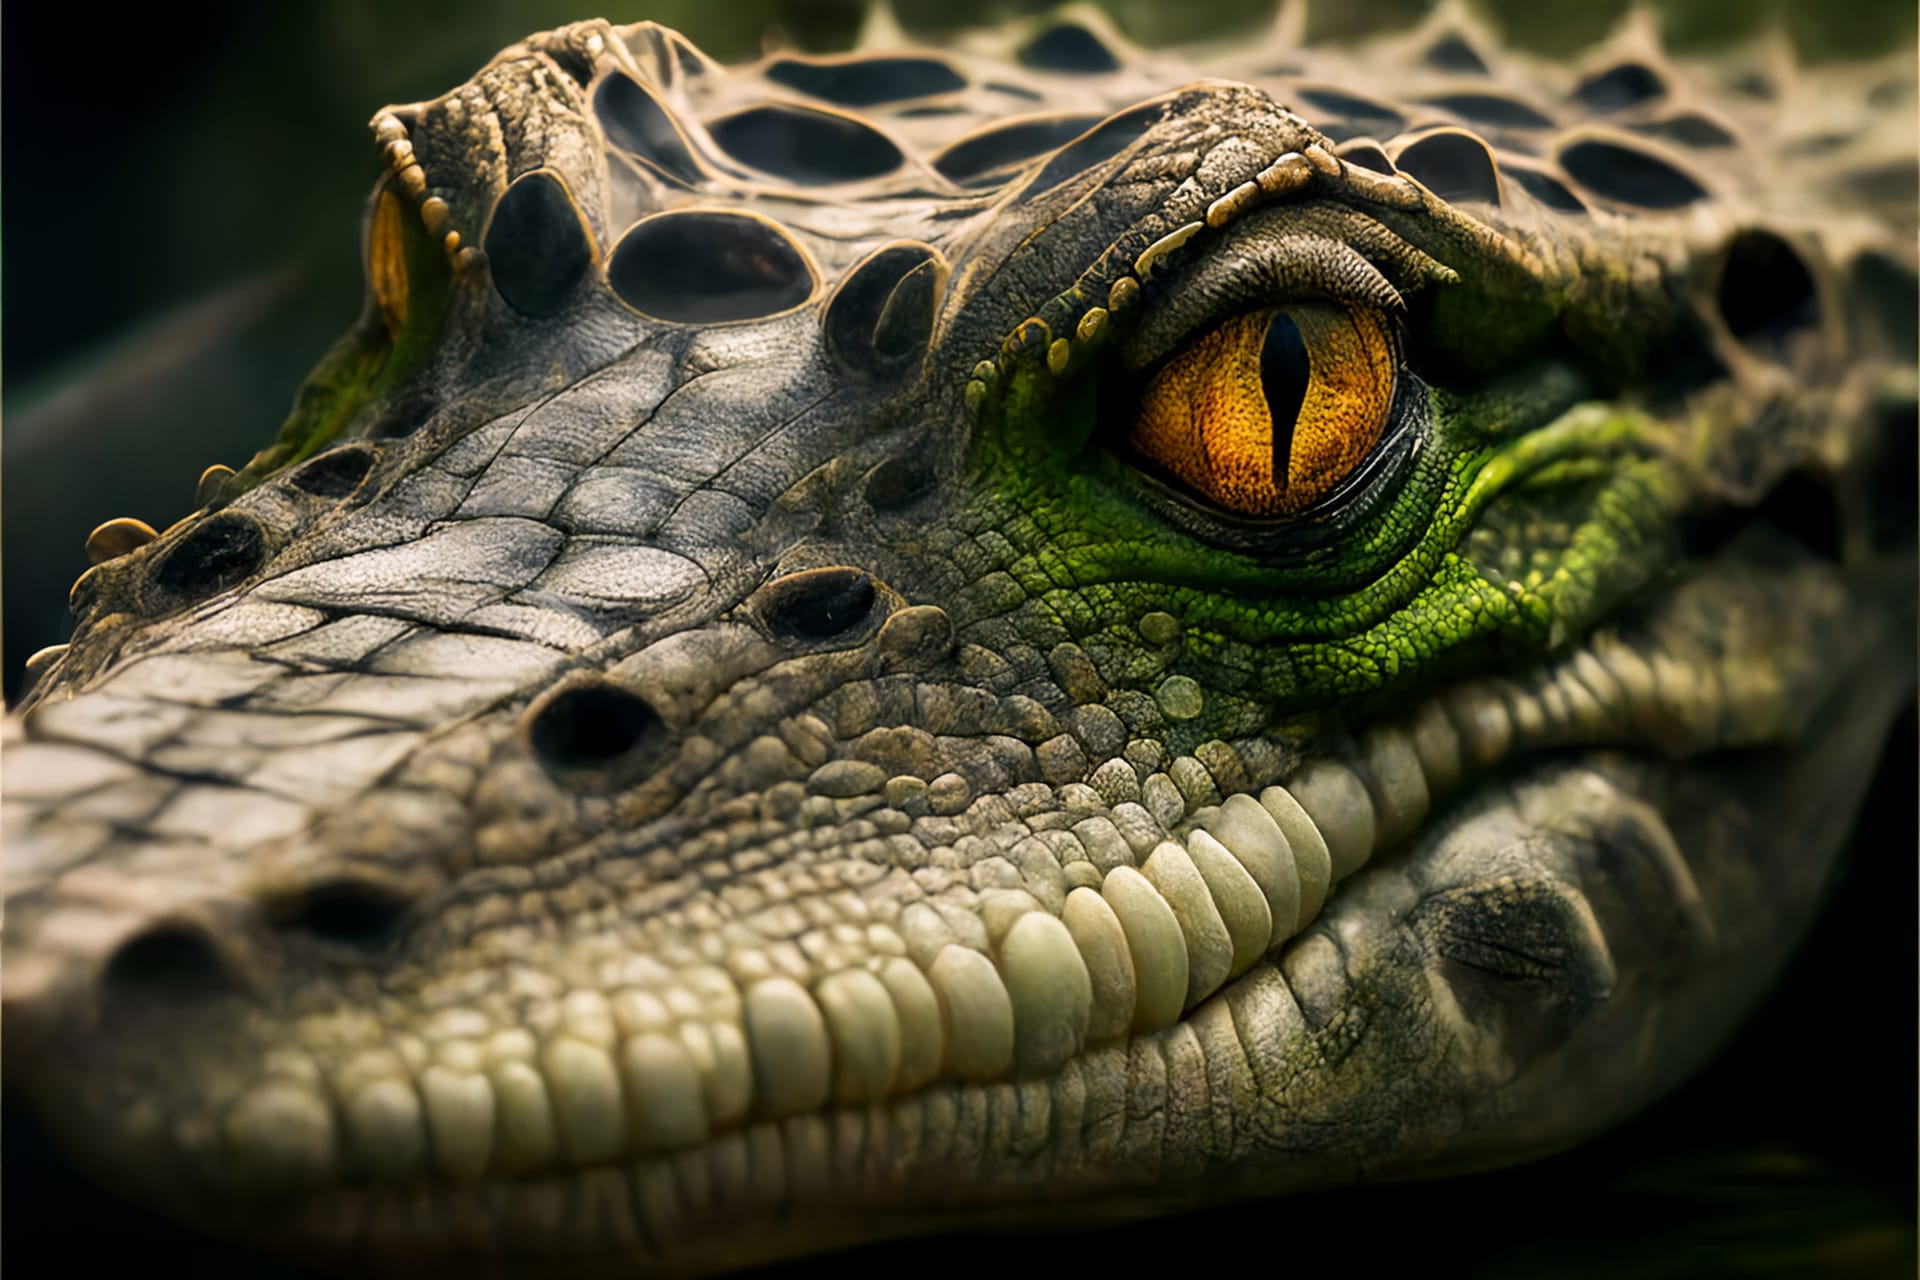 Realistic crocodile close up portrait image